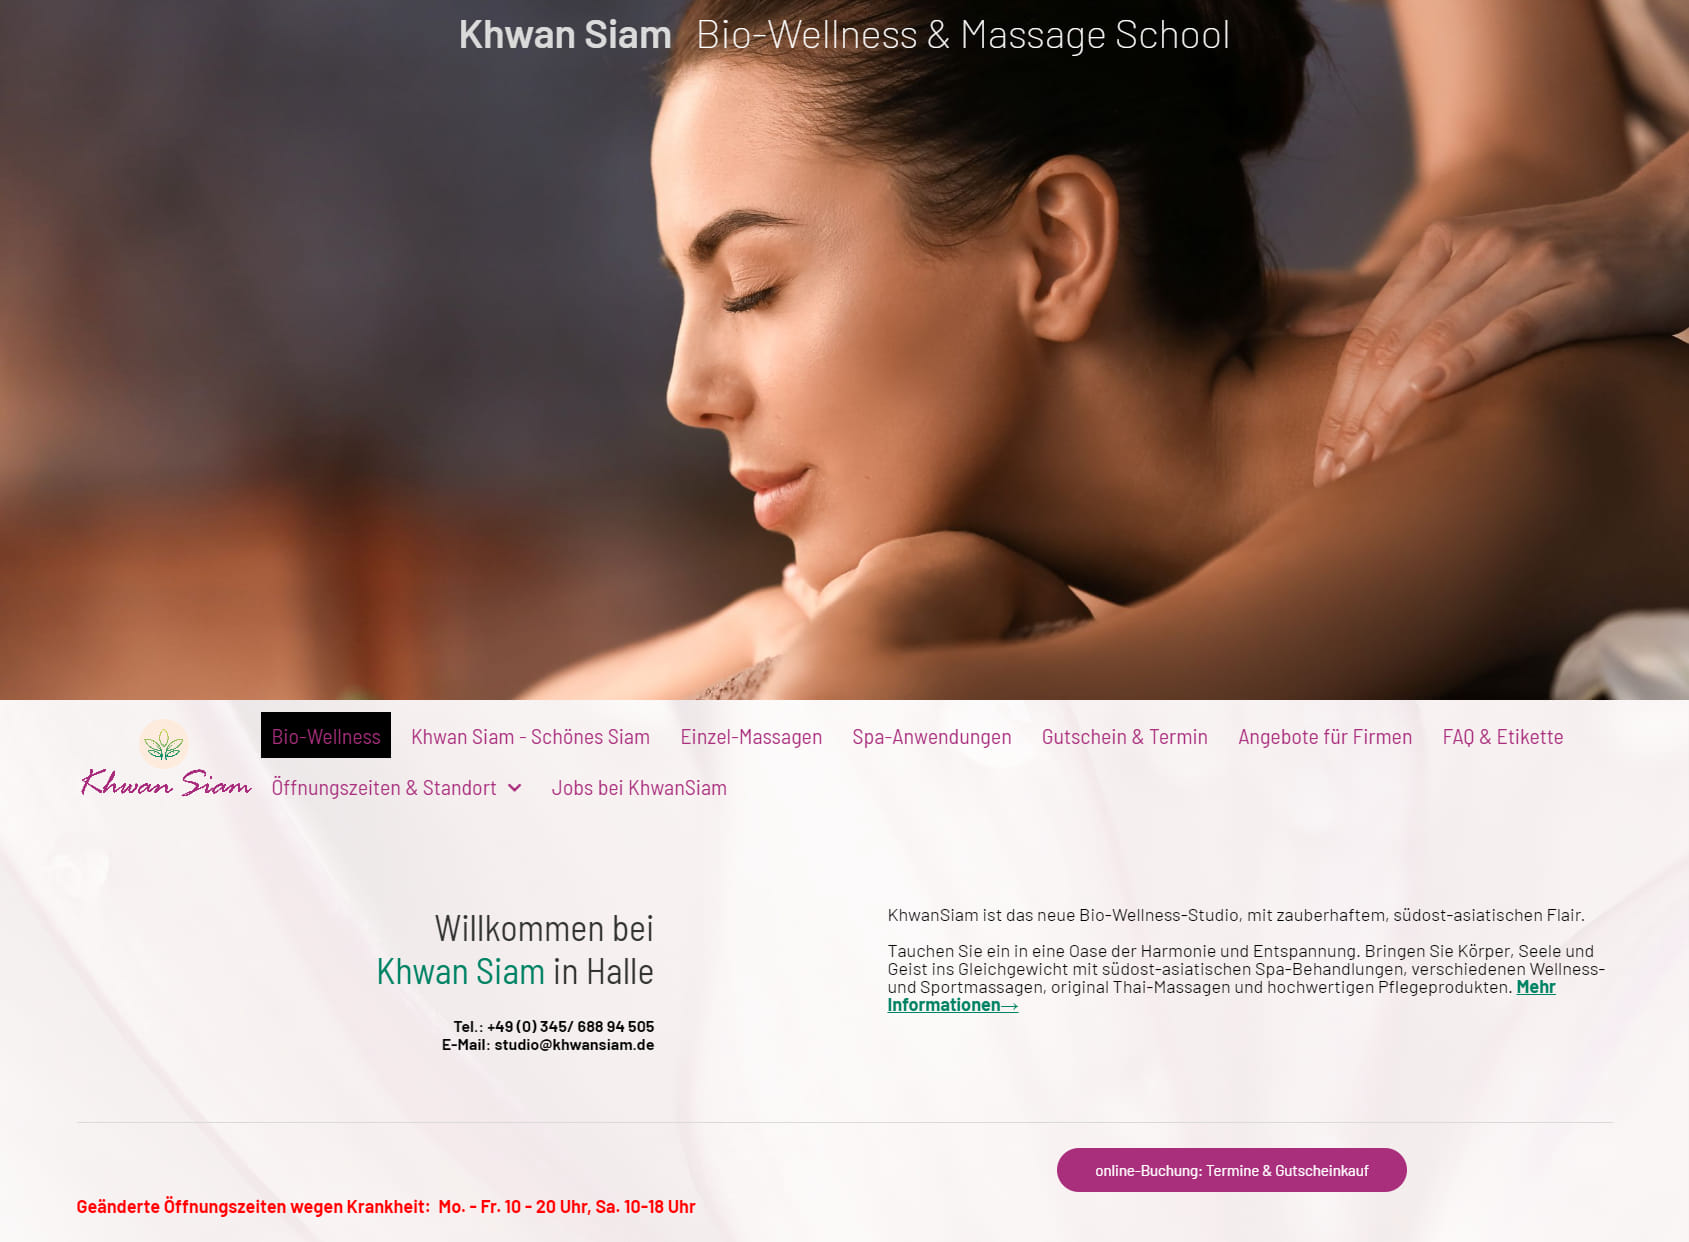 KhwanSiam BioWellness & Massage School